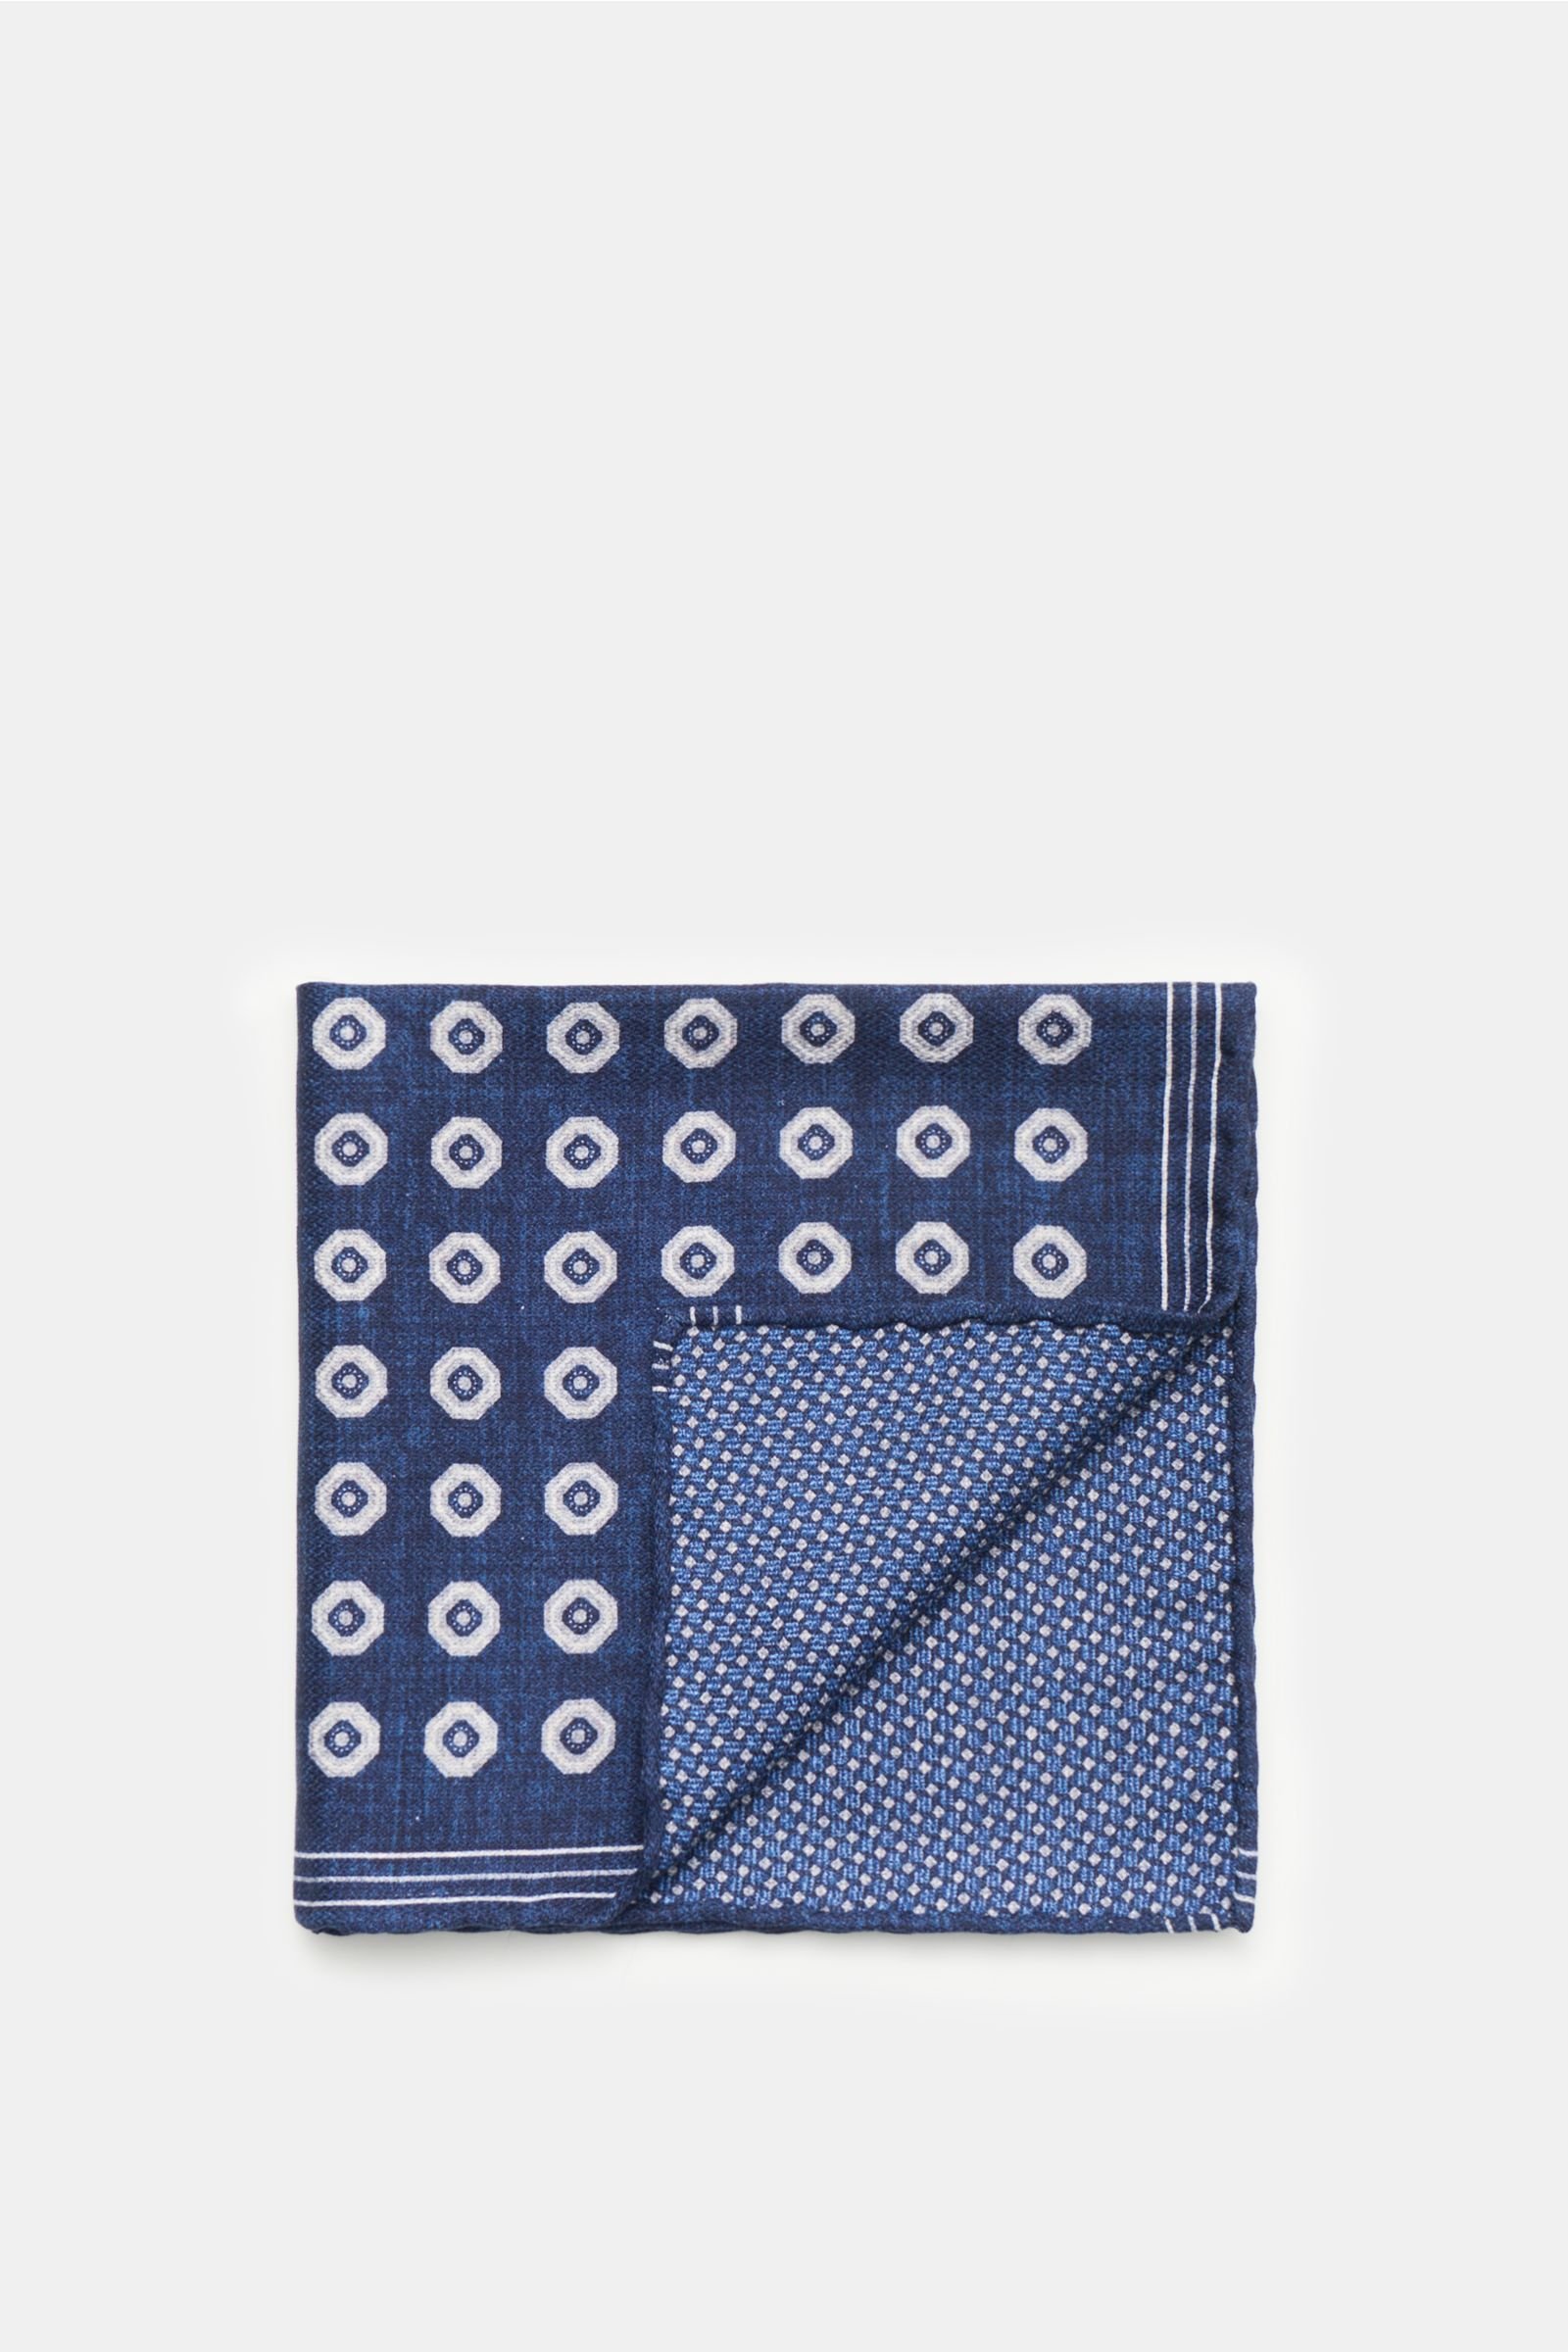 Pocket square navy/light grey patterned